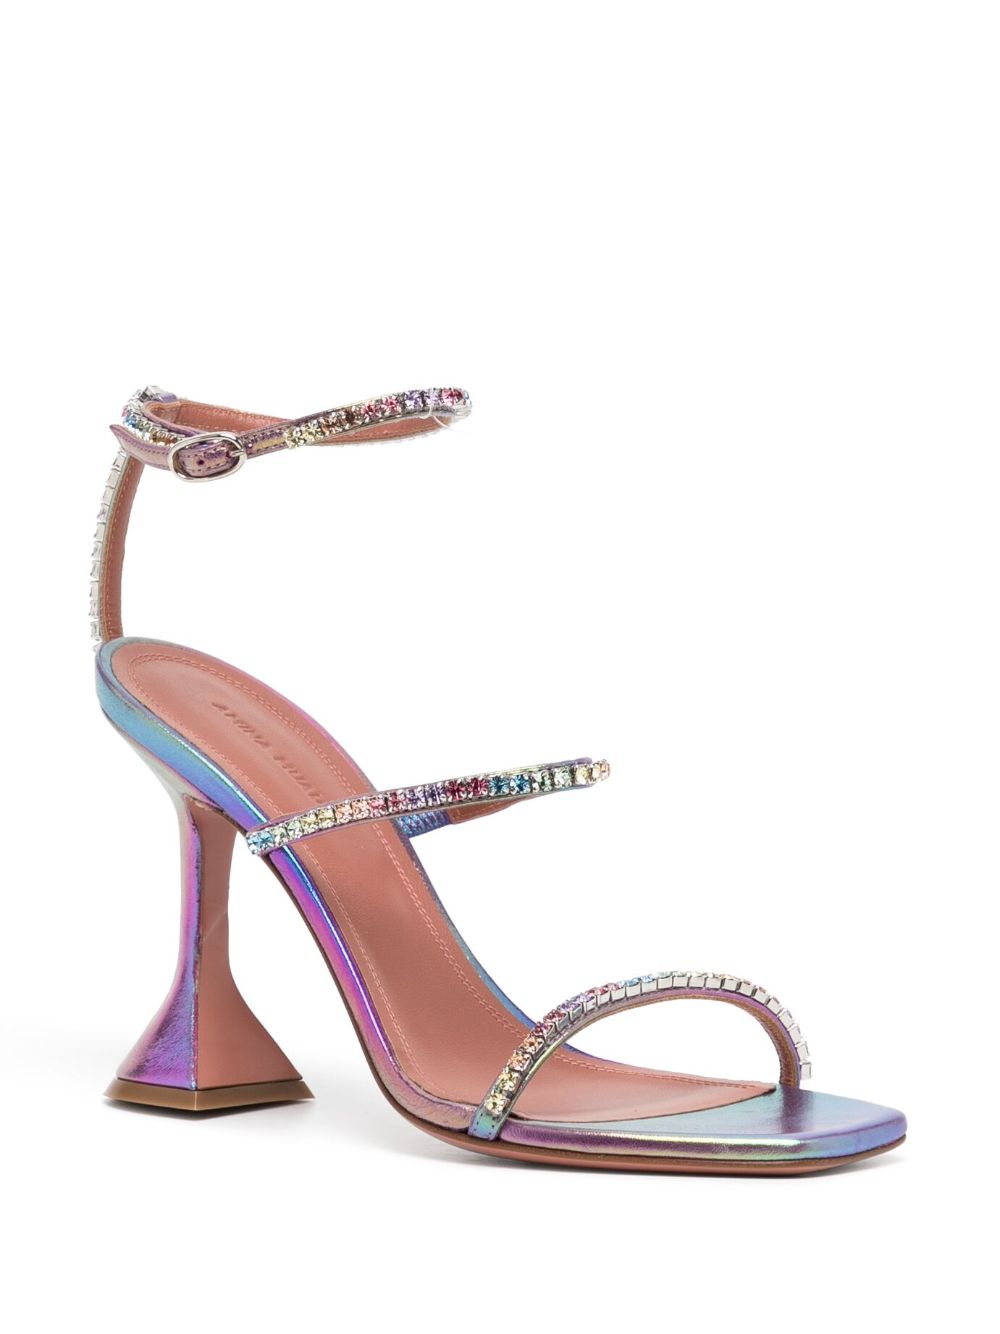 Amina Muaddi Gilda 95mm iridescent sandals - Veelkleurig